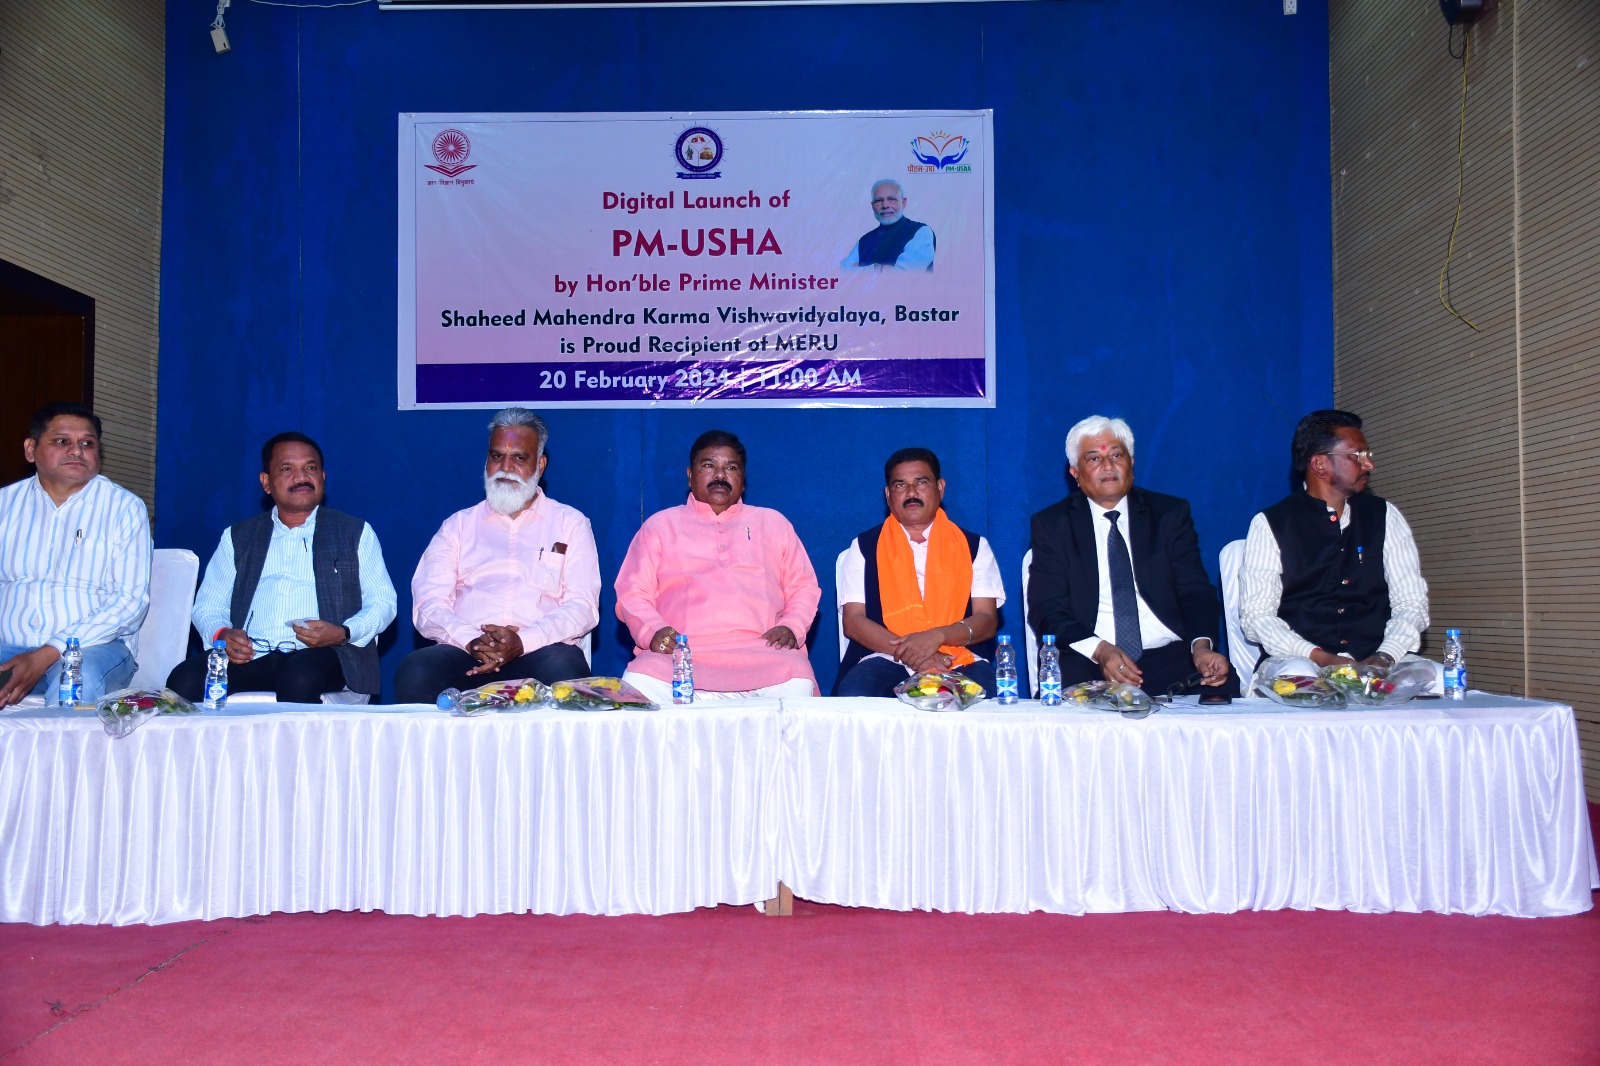 Digital Launch of PM-USHA by Hon